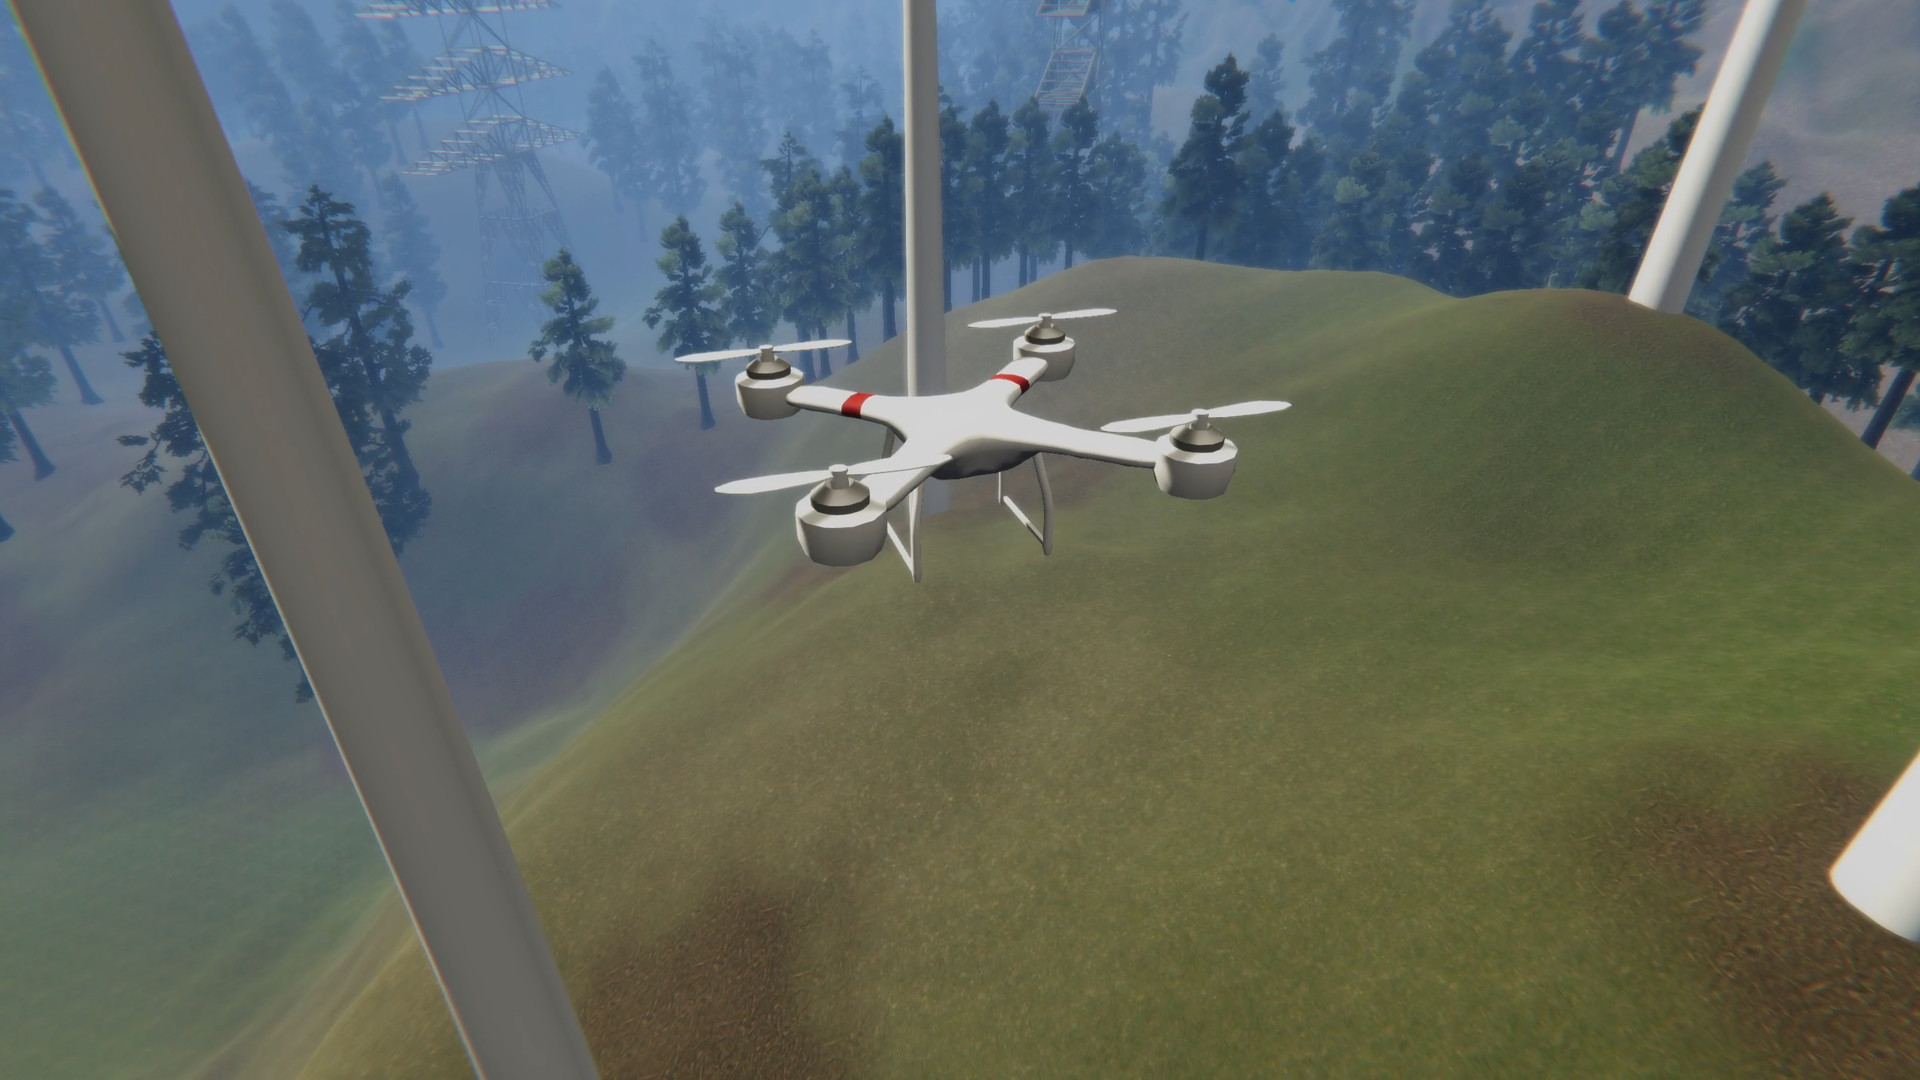 Drone Simulator Free Download